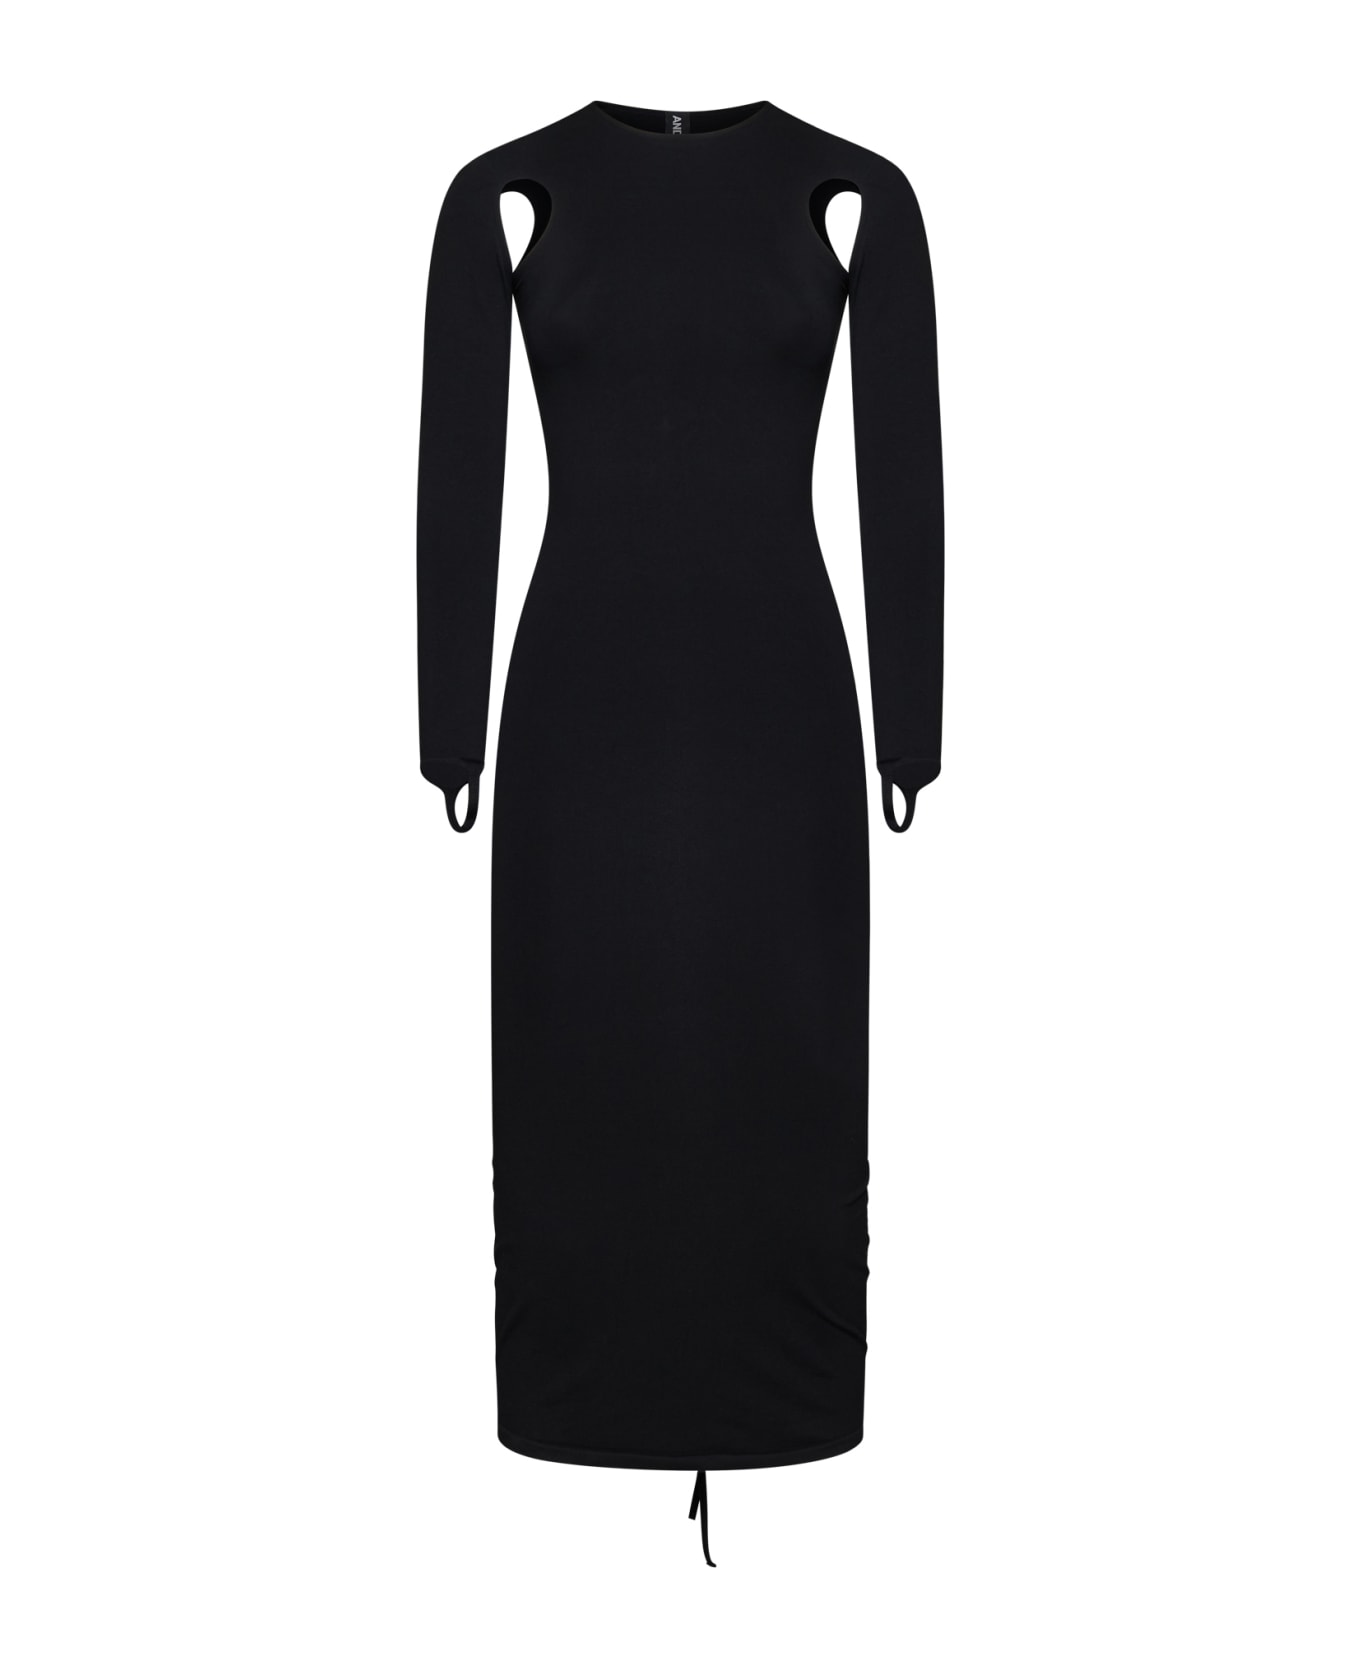 ANDREĀDAMO Dress - Black